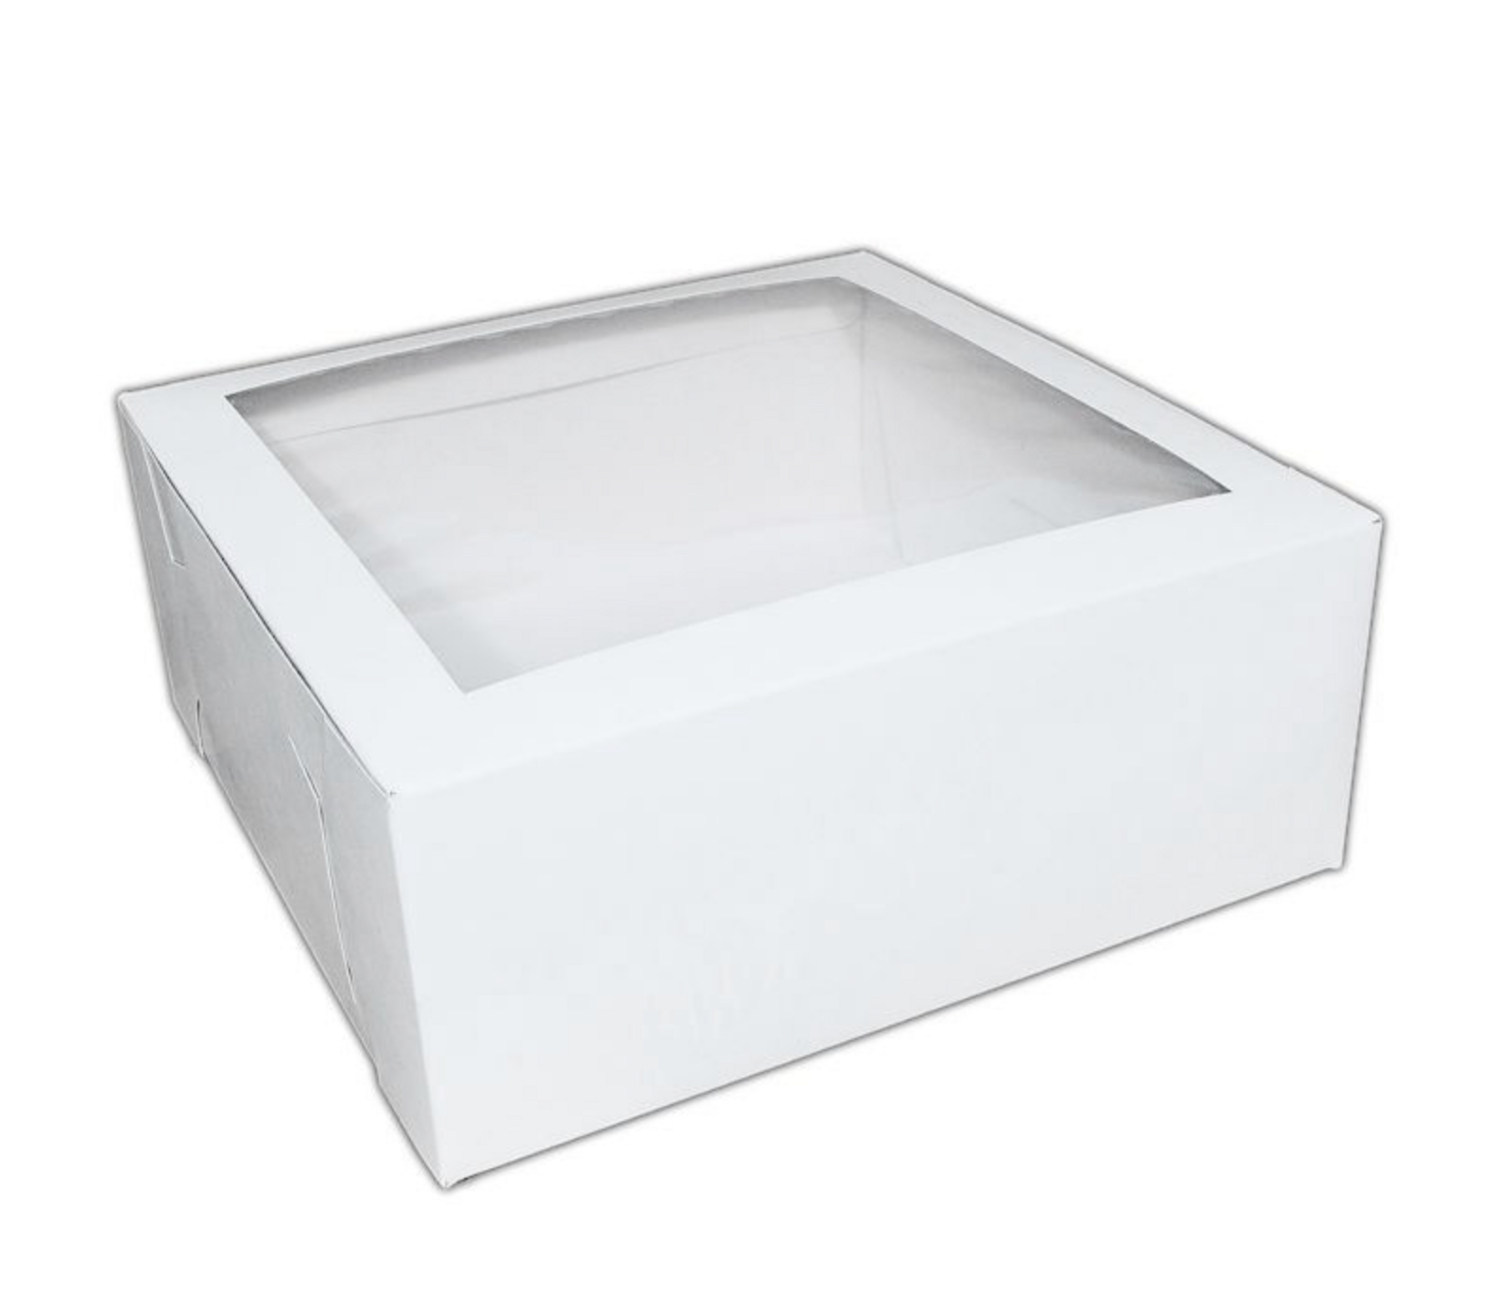 Cake Box With Window - Χαμηλό Κουτί με παράθυρο 20εκ  ΜΟΝΟ ΓΙΑ ΠΑΡΑΛΑΒΗ ΑΠΟ ΤΟ CAKES BY SAMANTHA